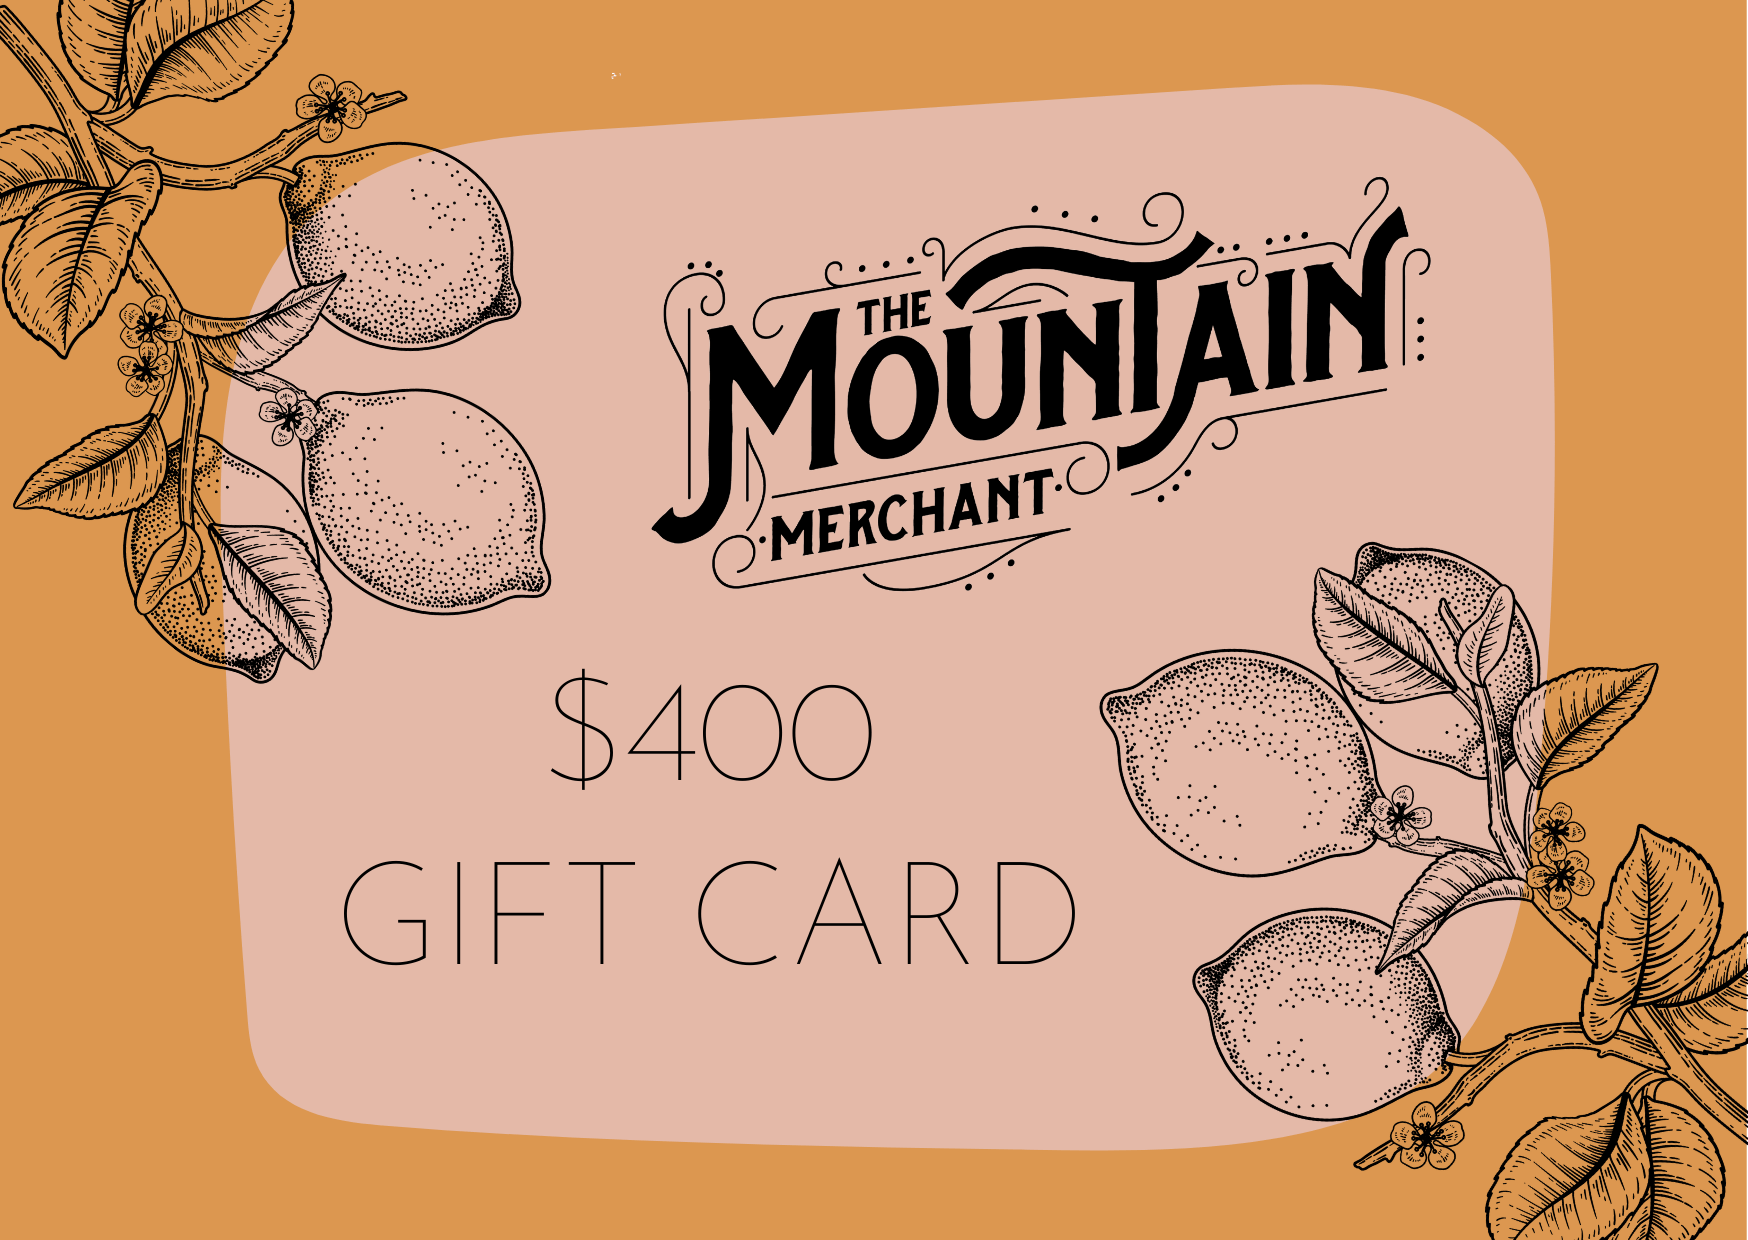 The Mountain Merchant - Gift Card $400 -The Mountain Merchant -The Mountain Merchant